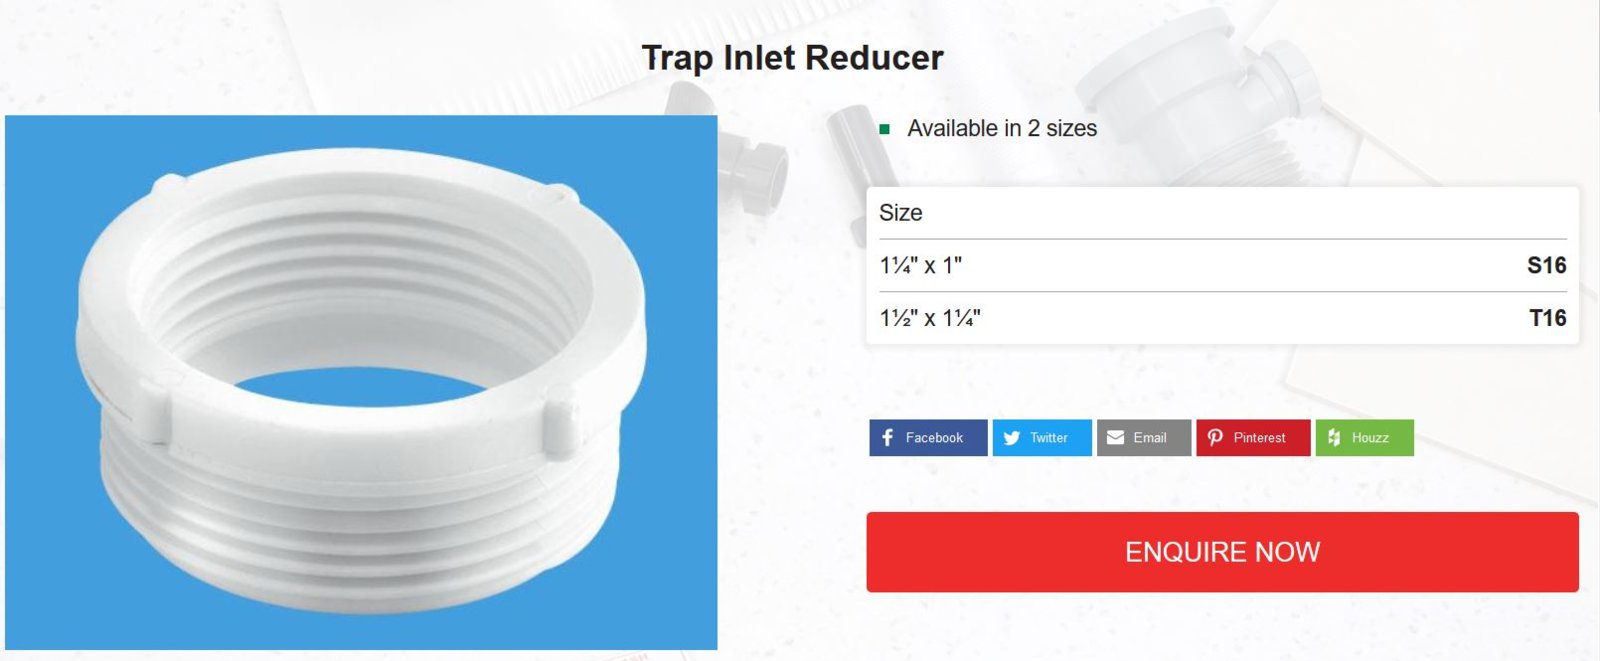 Trap Inlet Reducer.JPG